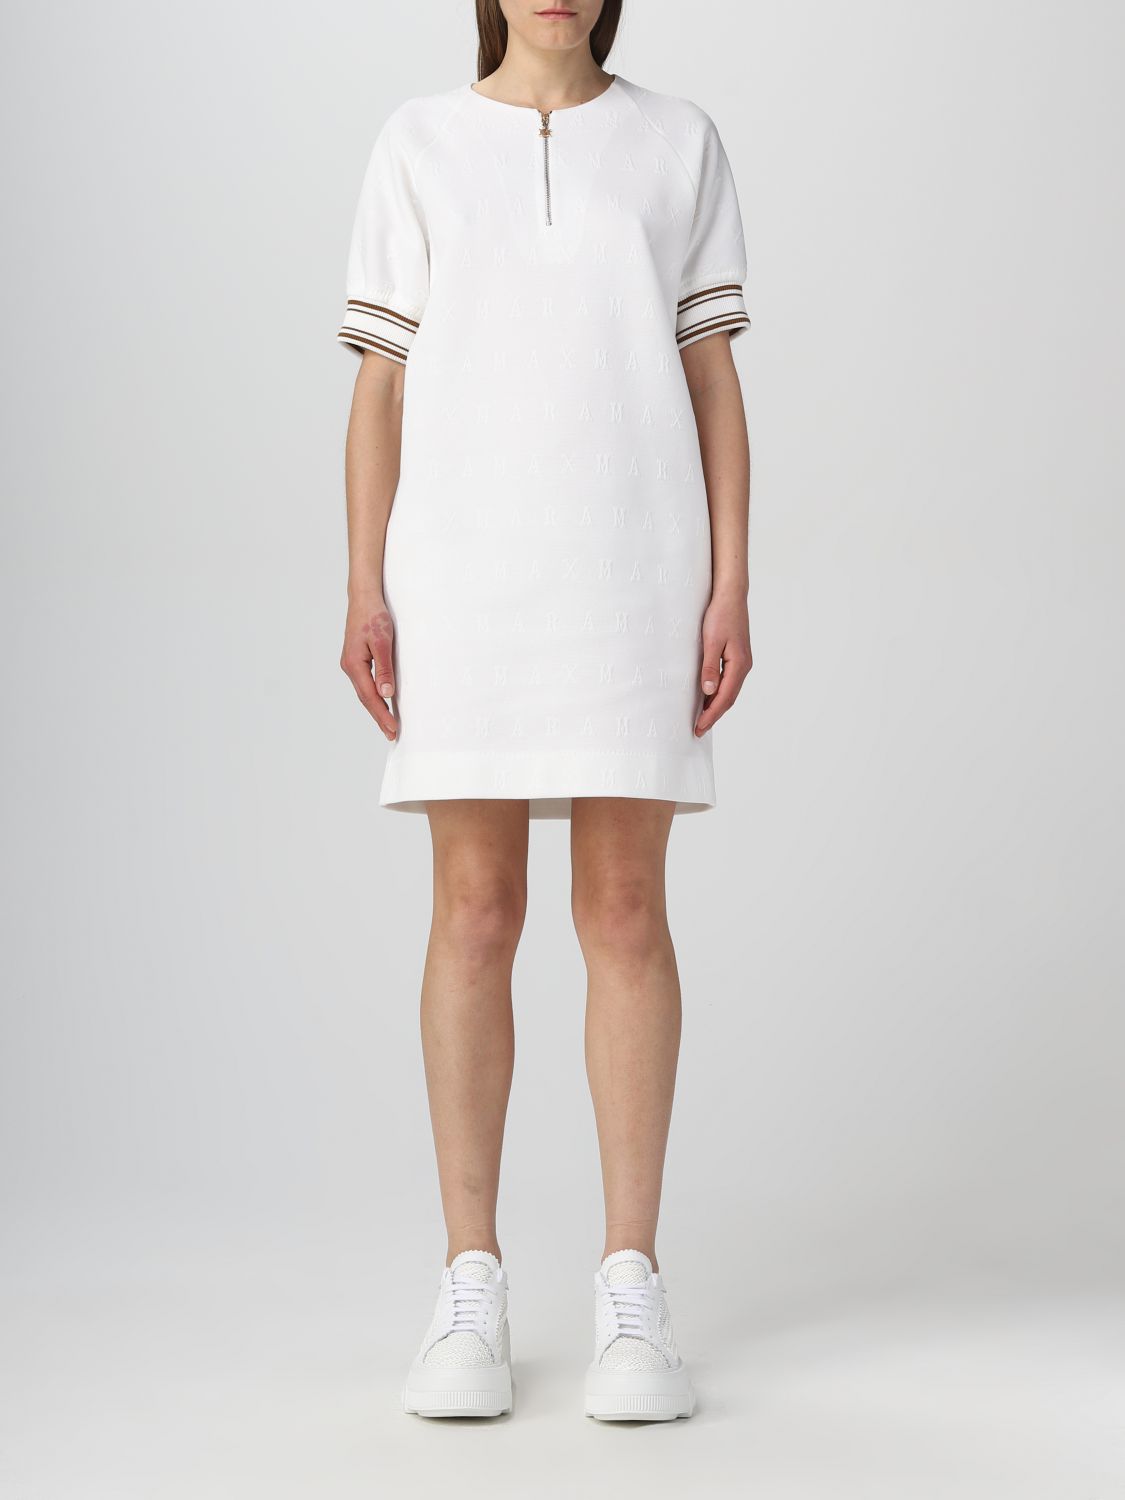 Armstrong compact Quagga MAX MARA: dress for woman - White | Max Mara dress 2316210432600 online on  GIGLIO.COM